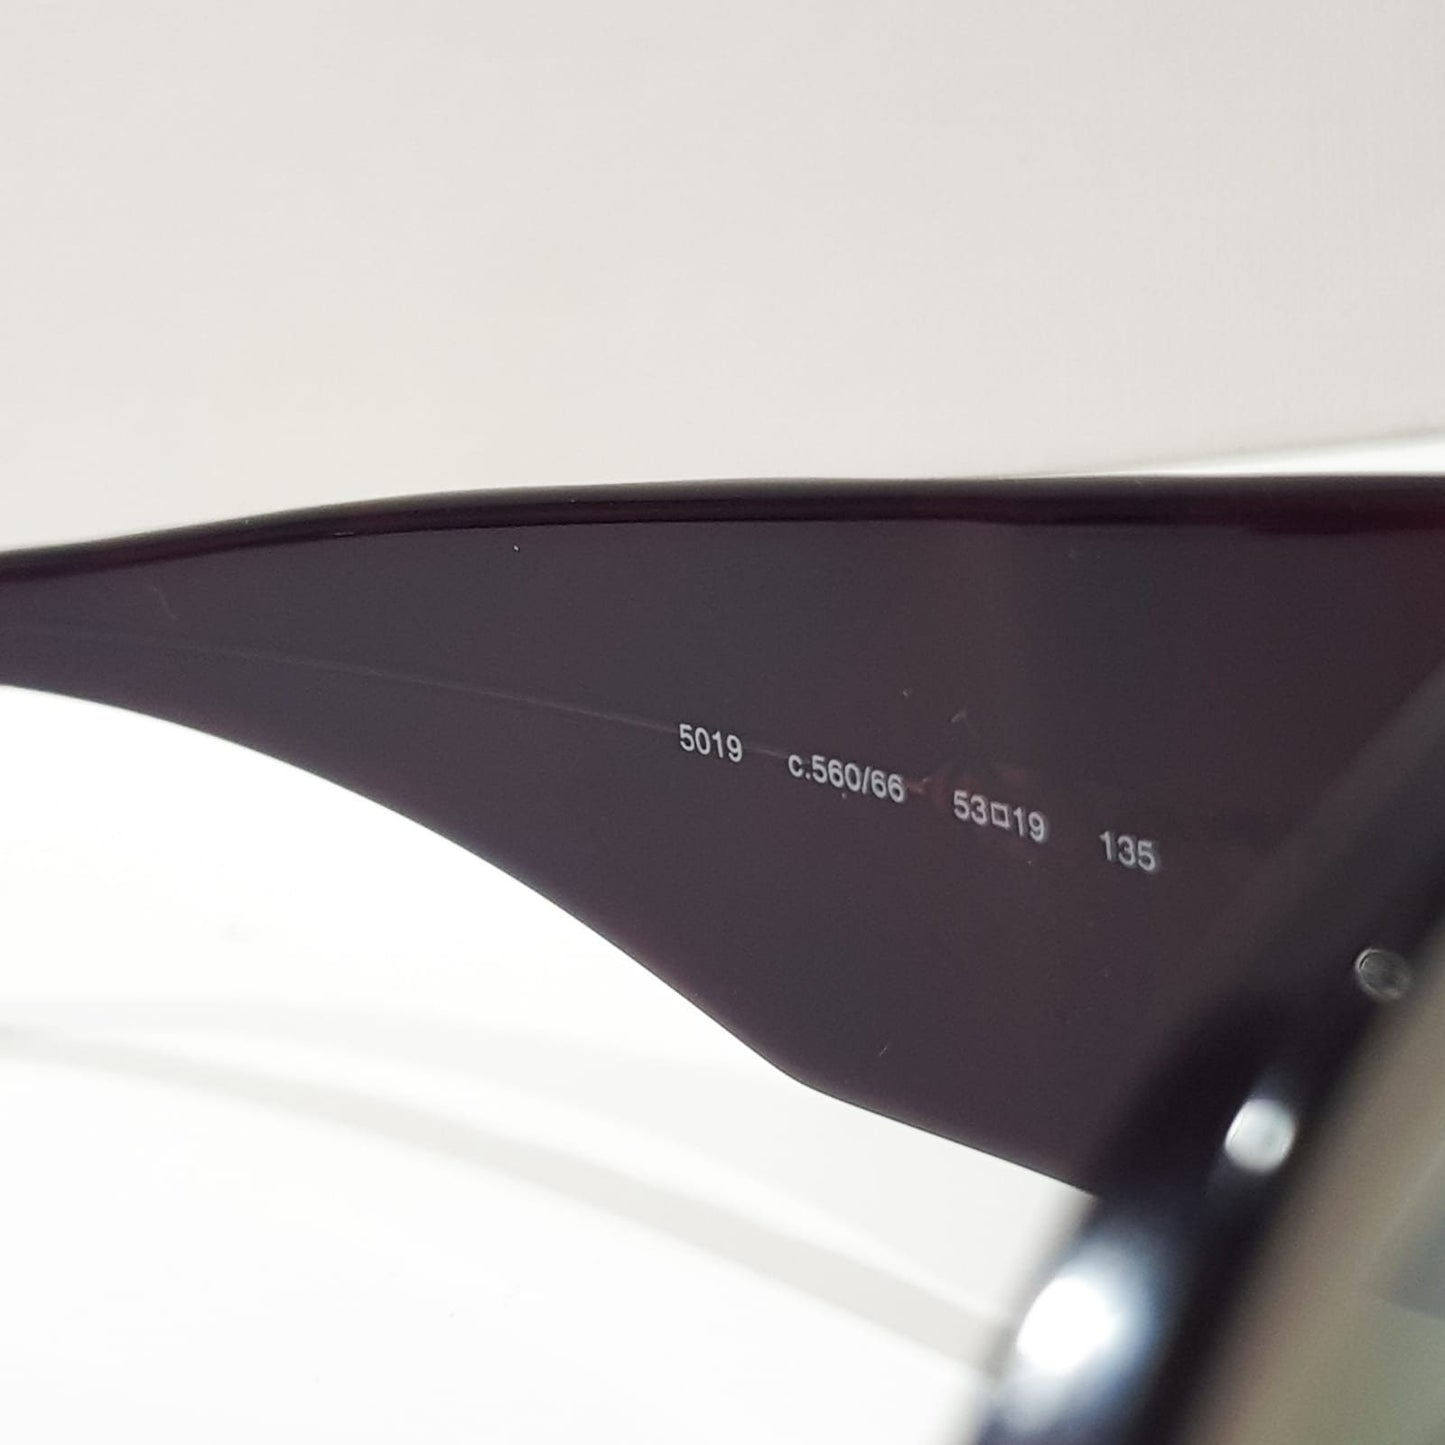 Chanel 5019 复古太阳镜 gafas 眼镜 90 年代意大利制造 y2k